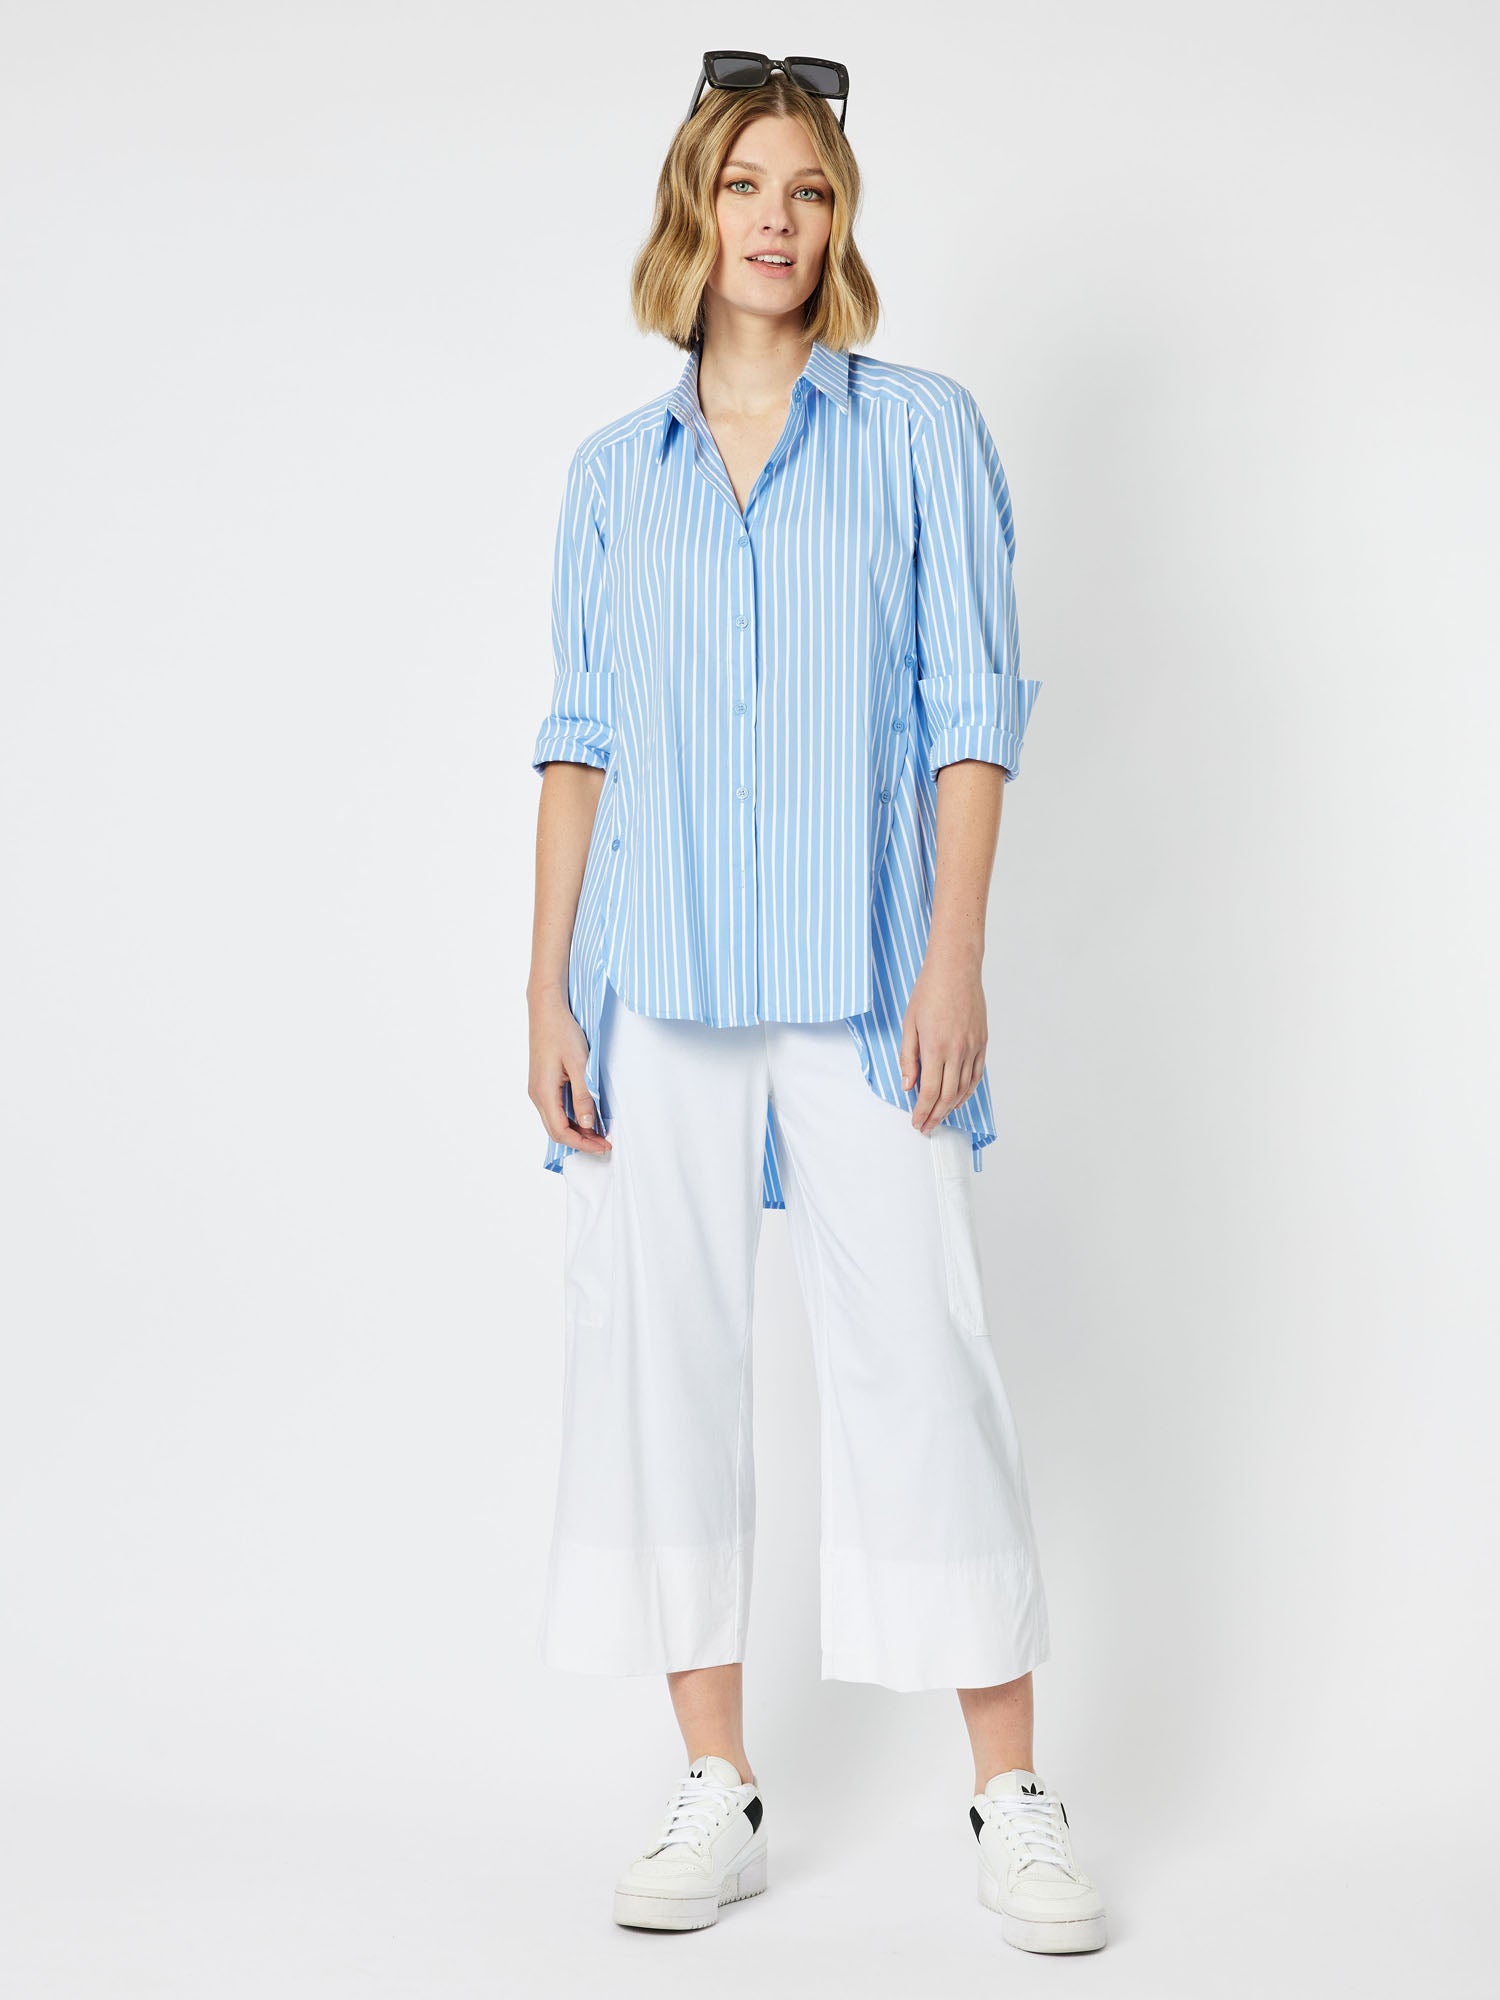 Stevie Stripe Shirt - Blue/White